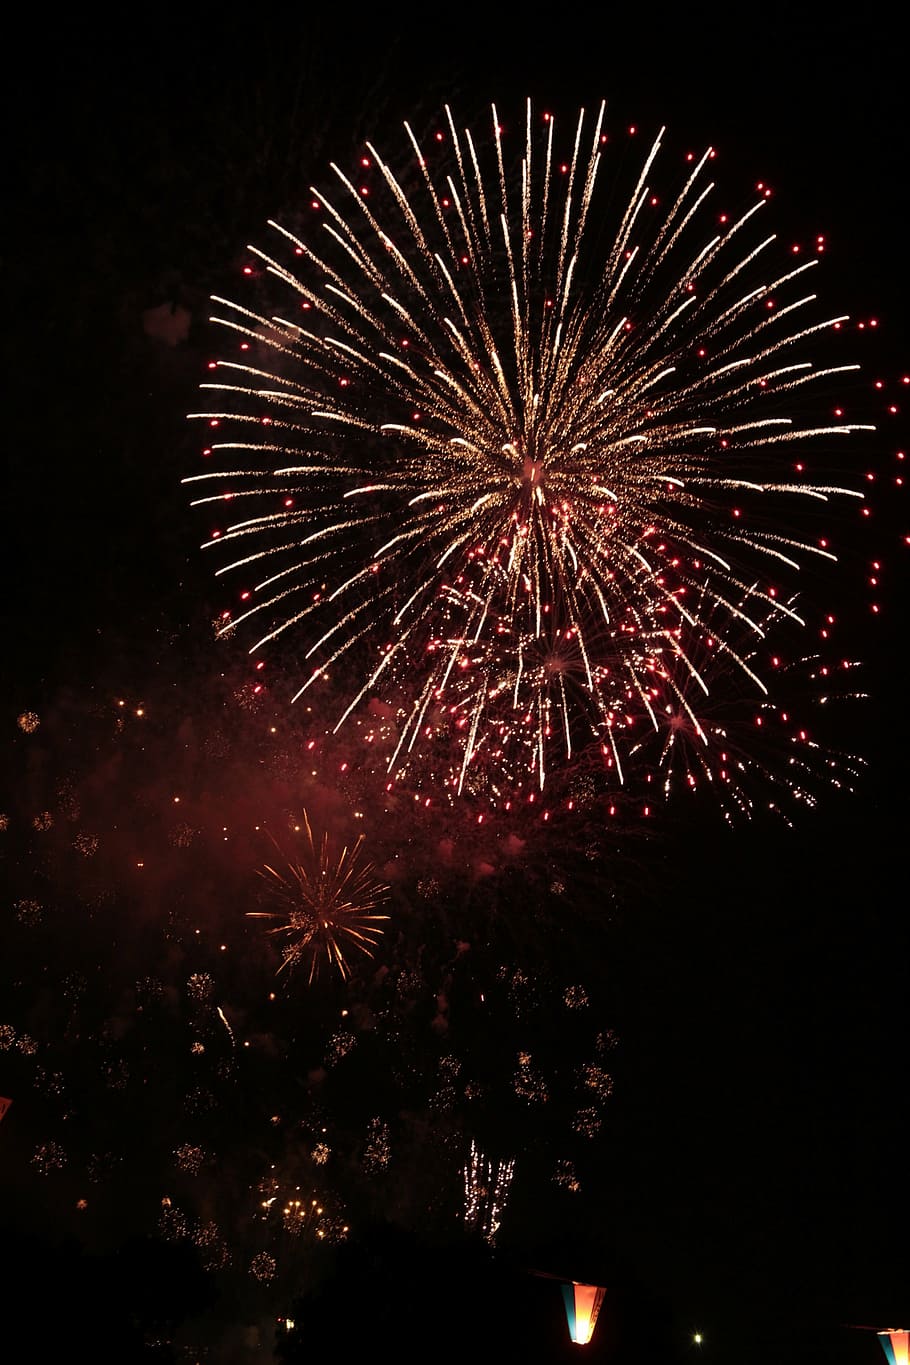 photograph of fireworks, fireworks, light show, celebration, explosion, event, celebrate, fun, festival, festive